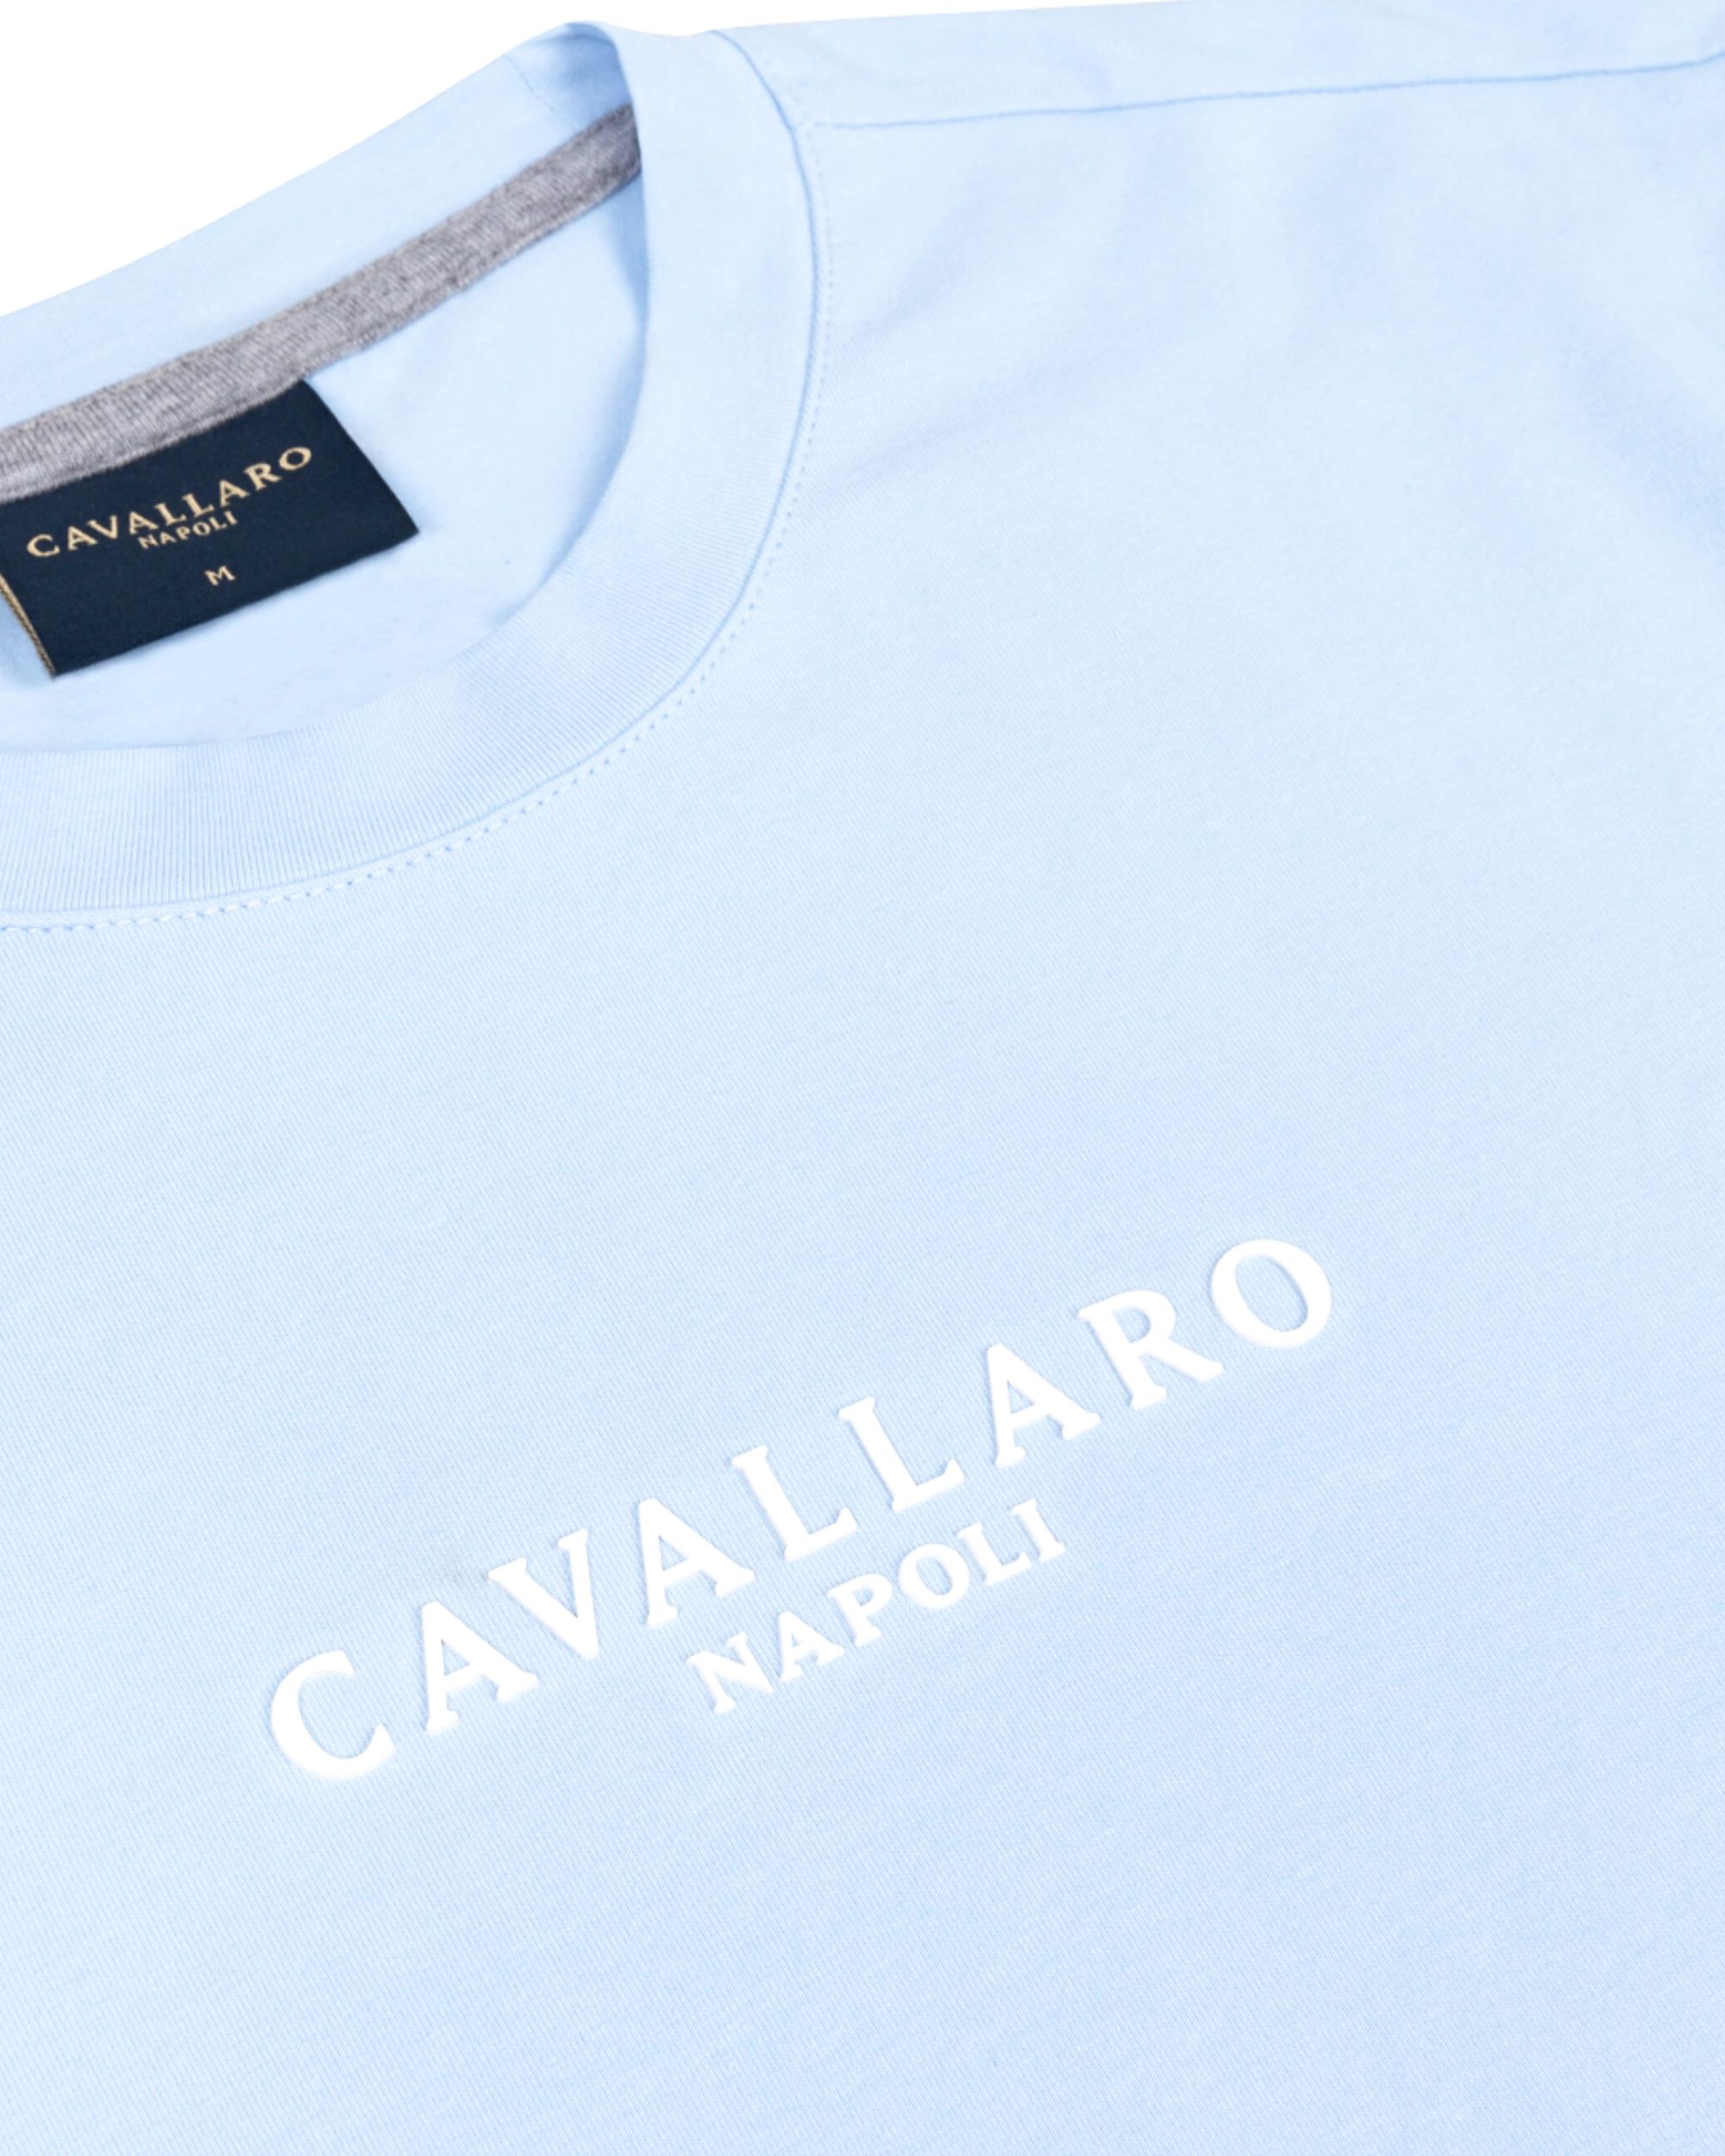 Cavallaro Mandrio T-shirt KM Blauw 094423-001-L